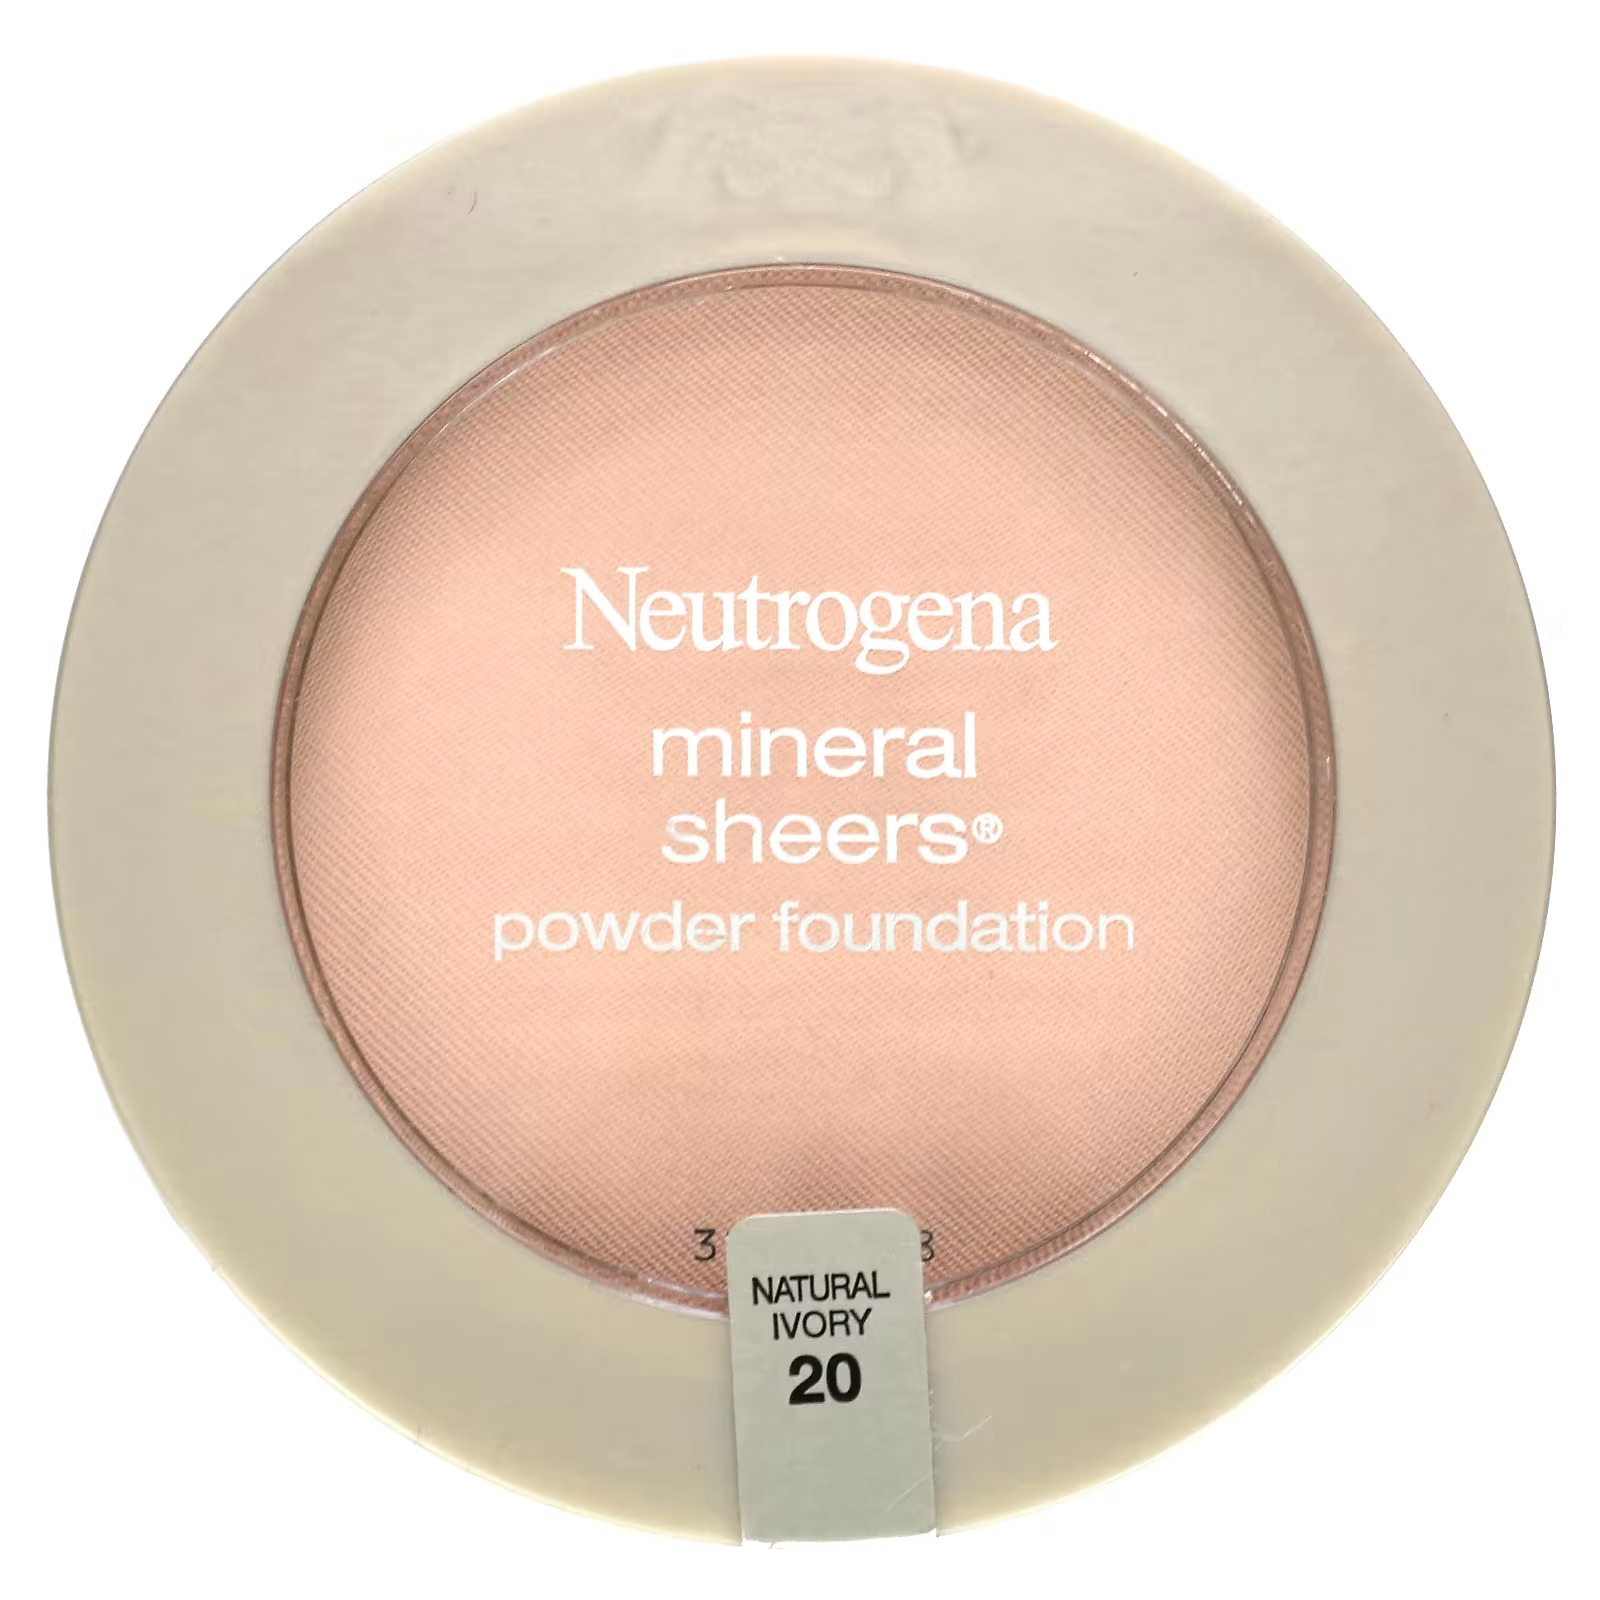 Neutrogena Mineral Sheers Powder Foundation Natural Ivory 20 0,34 унции (9,6 г) neutrogena mineral sheers пудра soft beige 50 0 34 унции 9 6 г